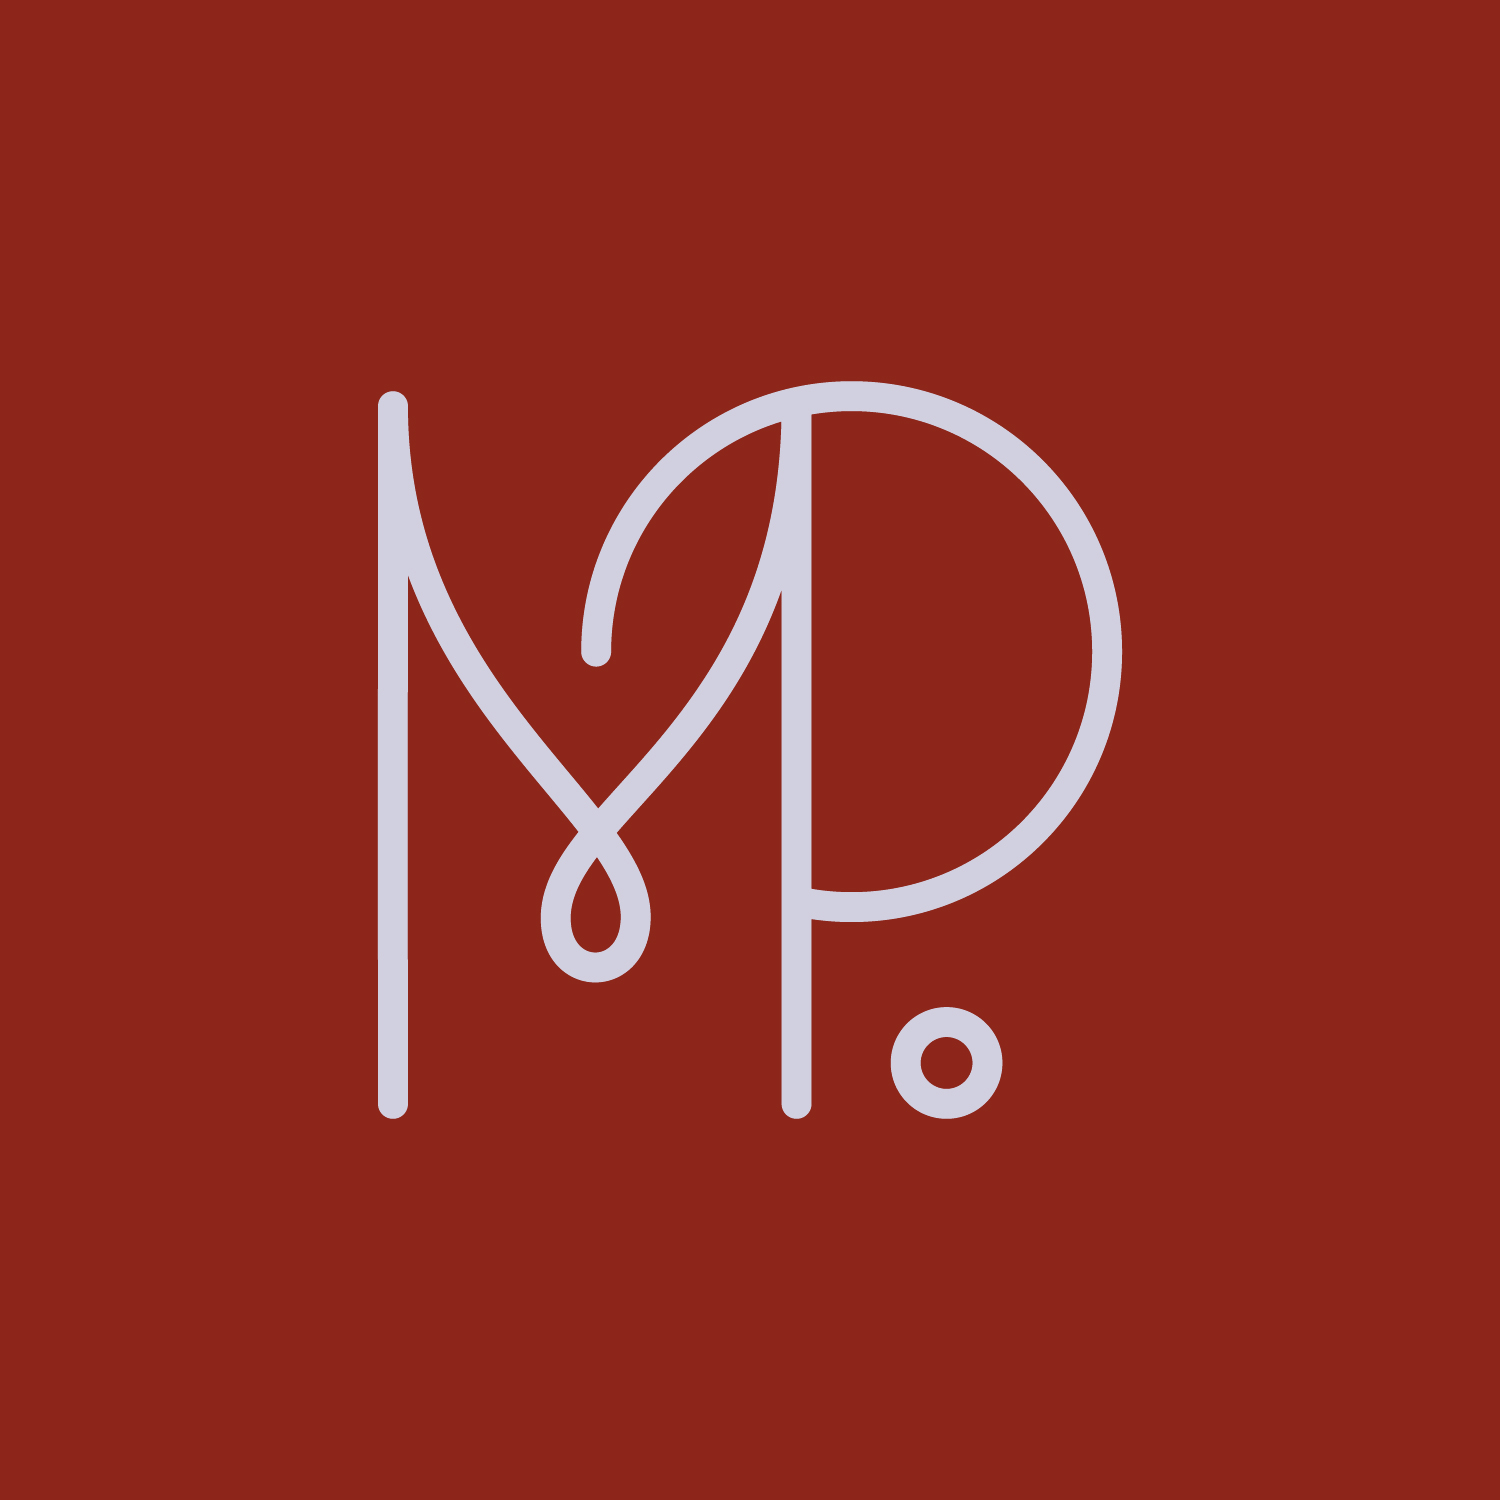 Mario Piras Chiropractic monogram logo branding identity design by Maximillian Piras